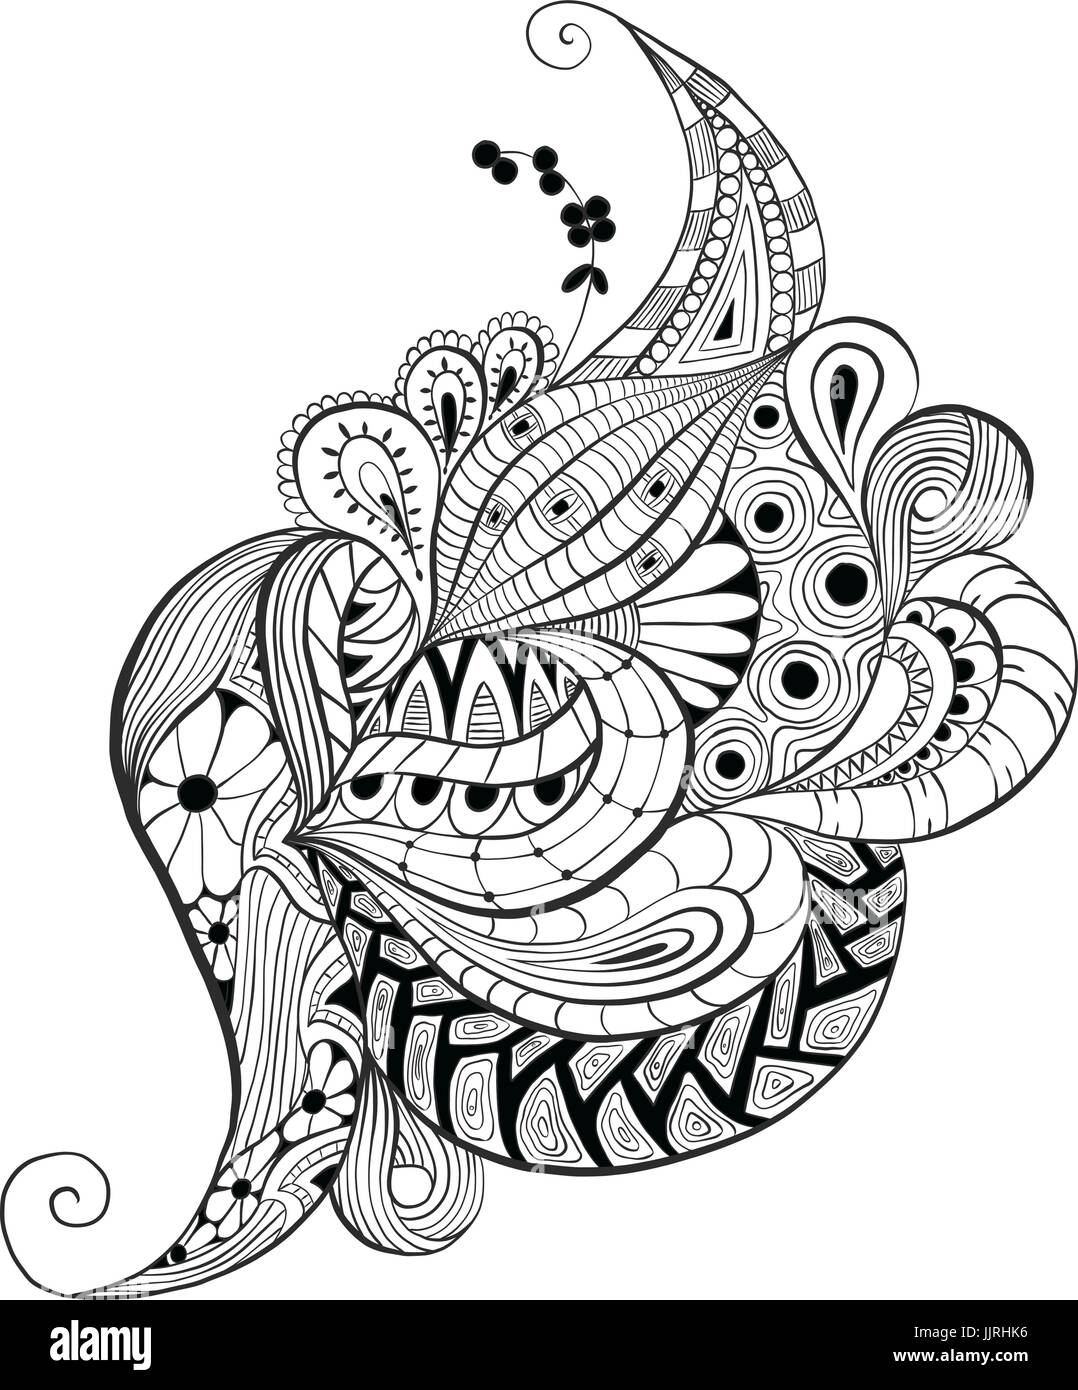 Vector illustration of abstract decorative doodles Illustration de Vecteur